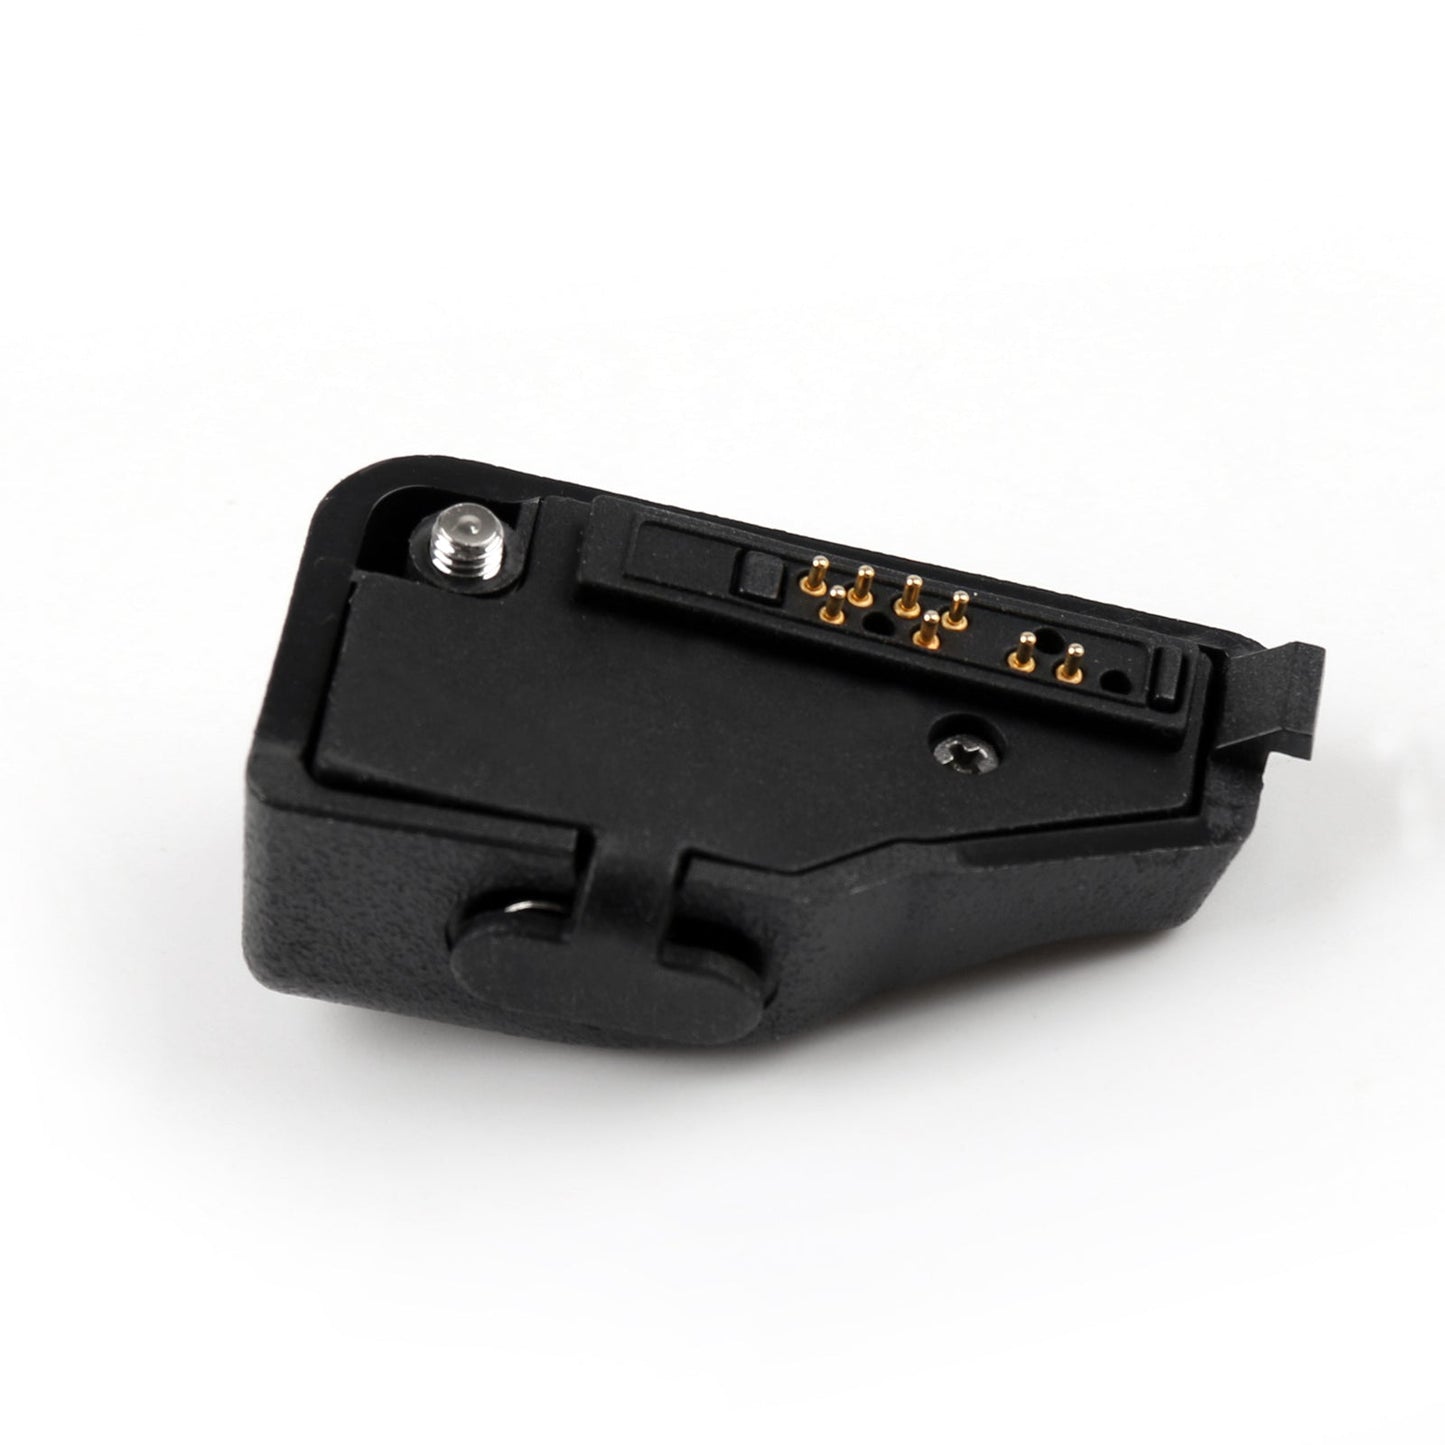 1 x Multi-Pin-Zu-2-Pin-Ohrhörer-Adapter für Kenwood-Radio TK280/380/385/3180